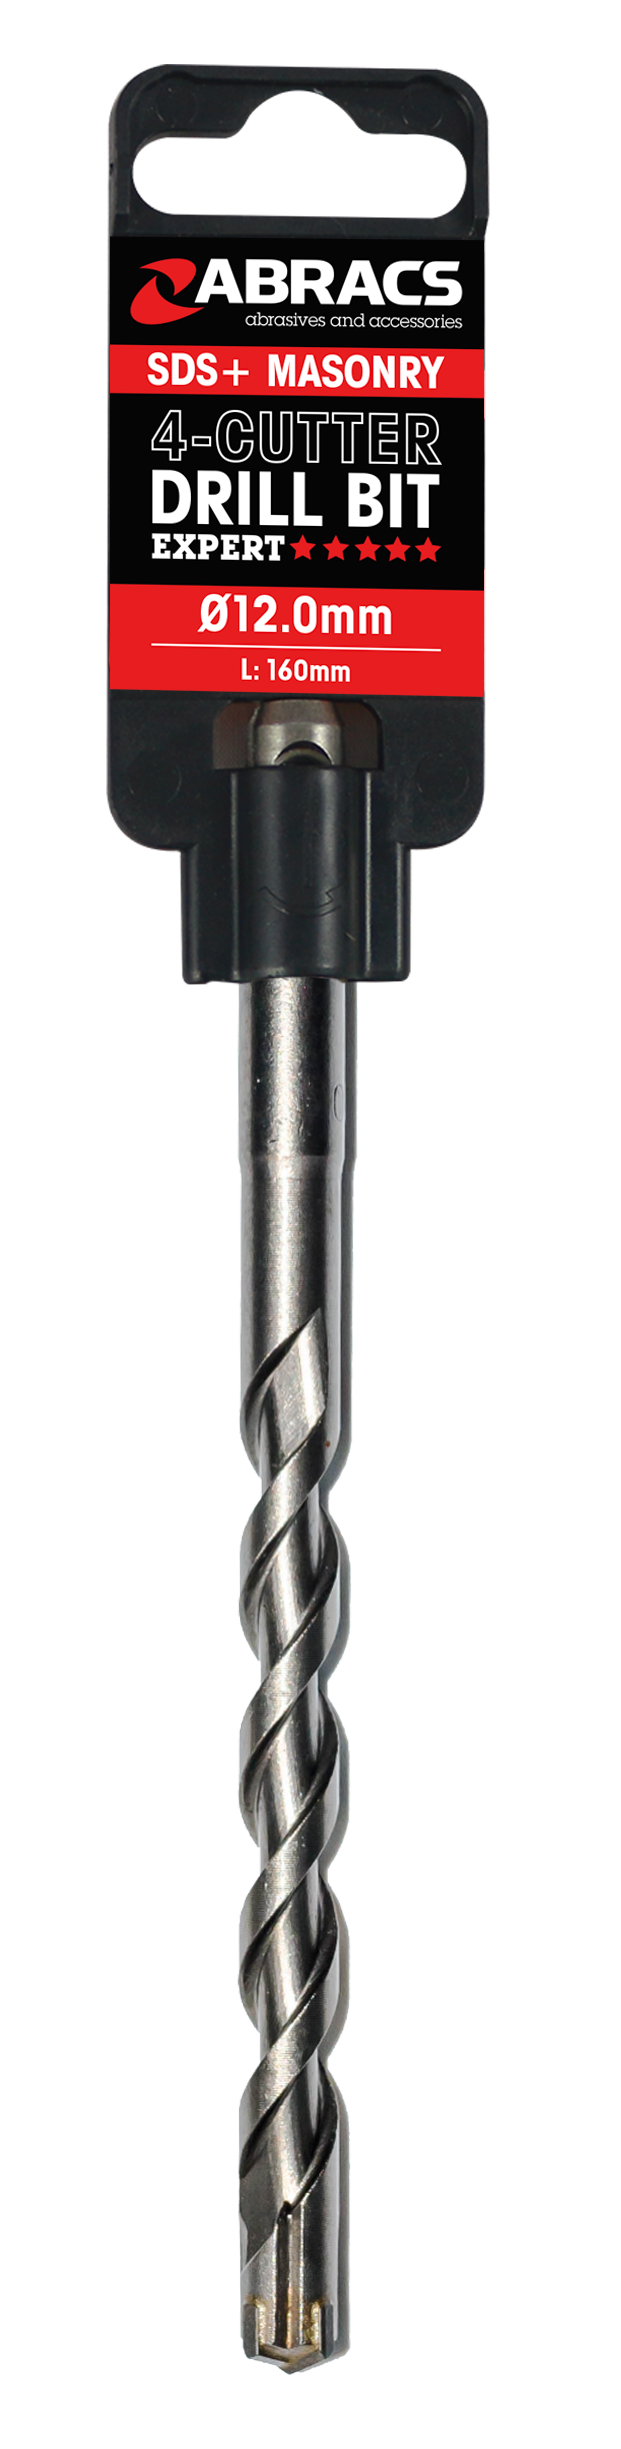 DBCX100310 10.0mm x 310mm SDS+ Masonry Drill Bit - 4 Cutter